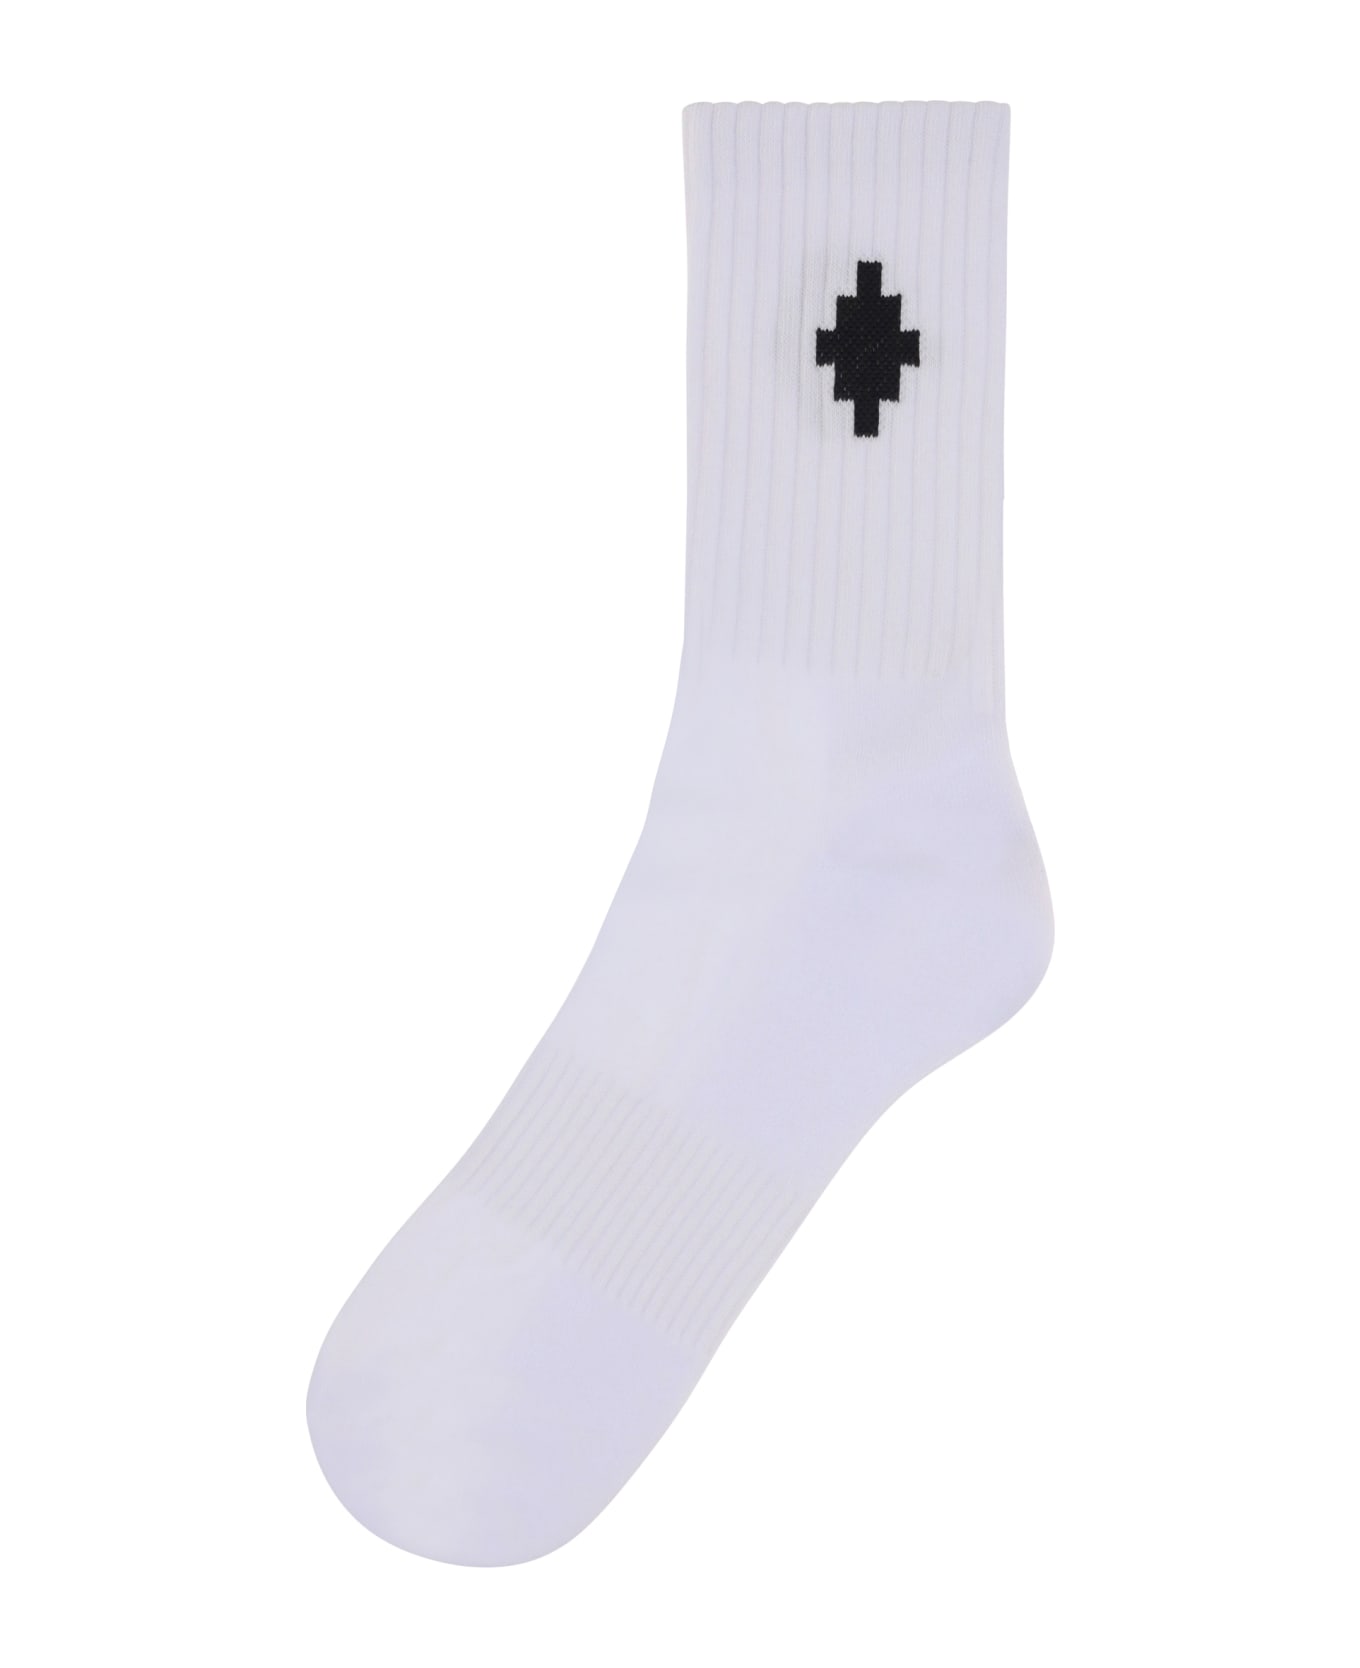 Marcelo Burlon Socks With Cross - White Black 靴下